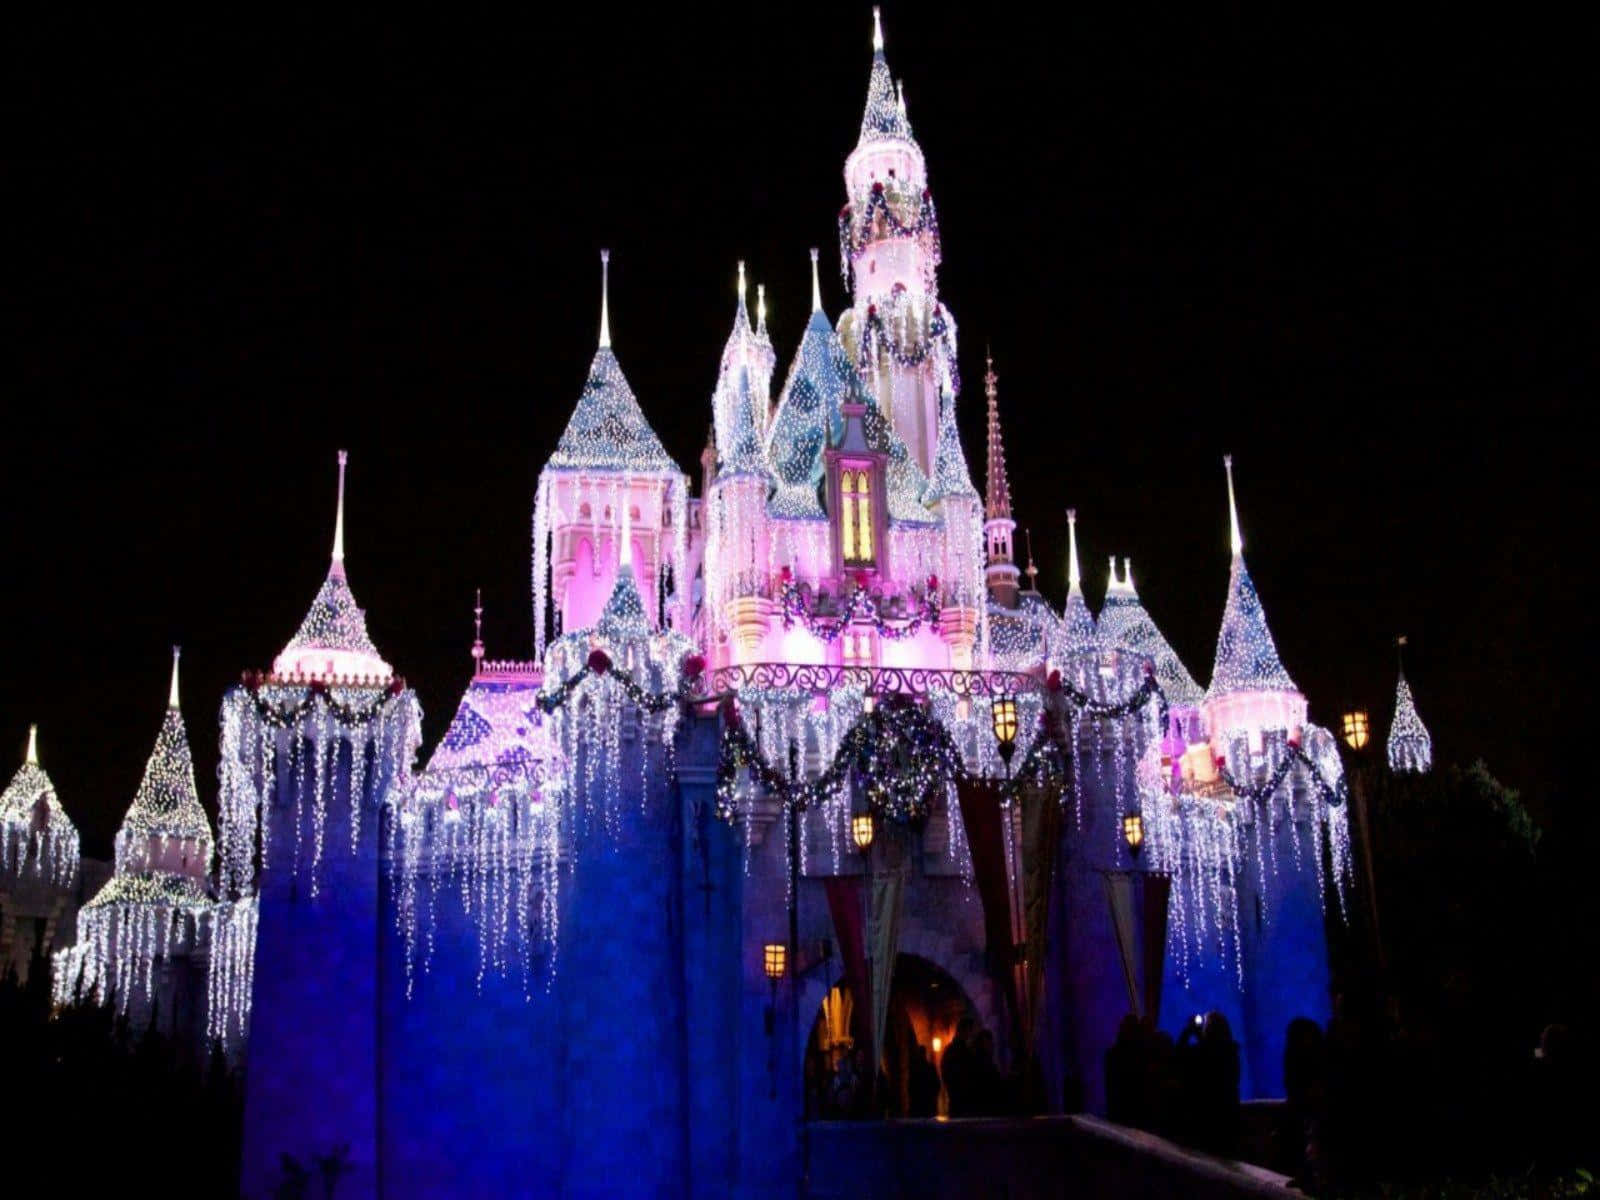 Enjoy the Magic of Disney this Christmas